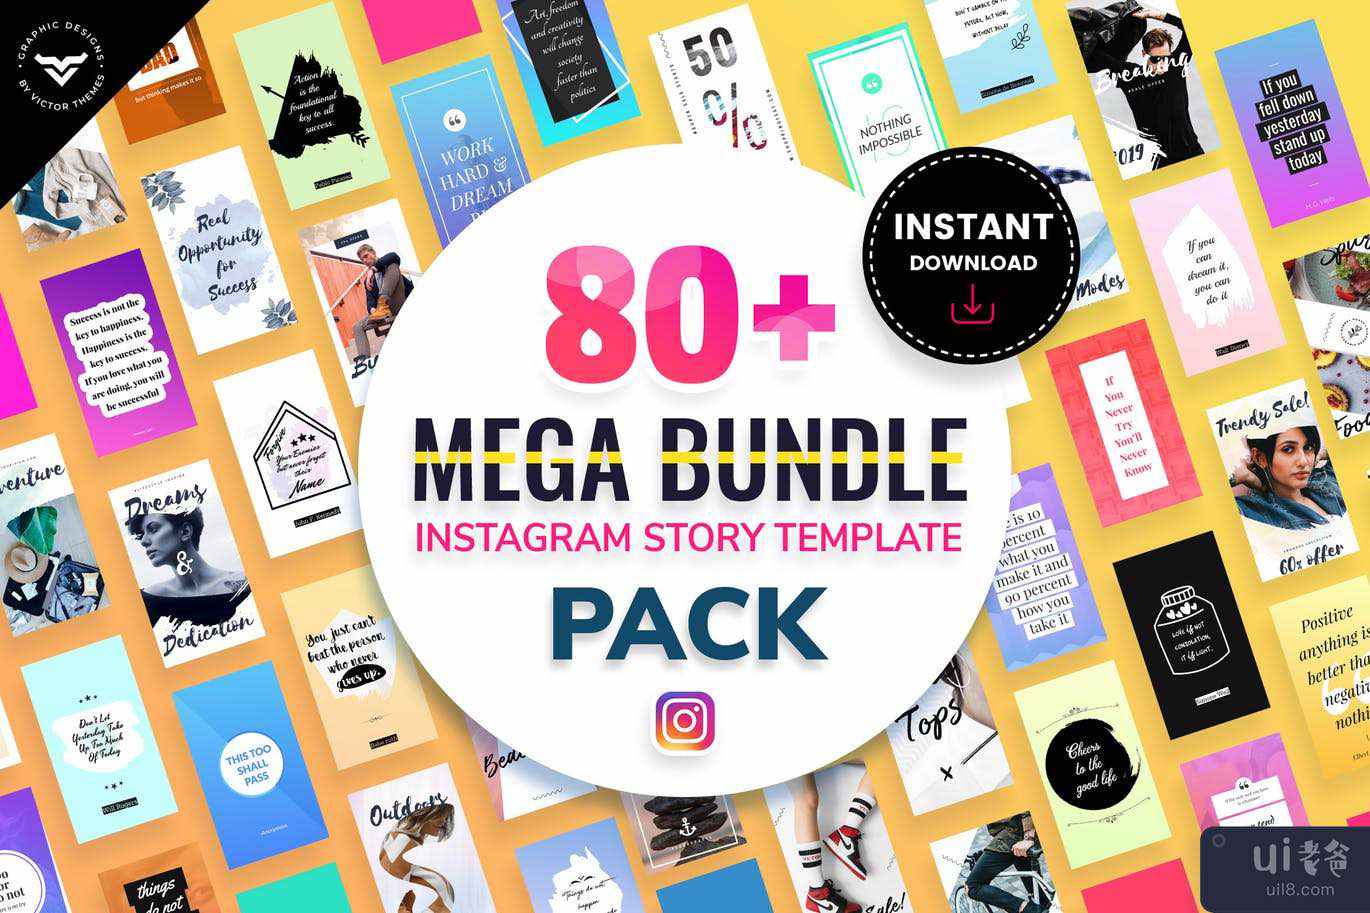 超级捆绑 Instagram 故事模板(Mega Bundle Instagram Stories Template)插图40